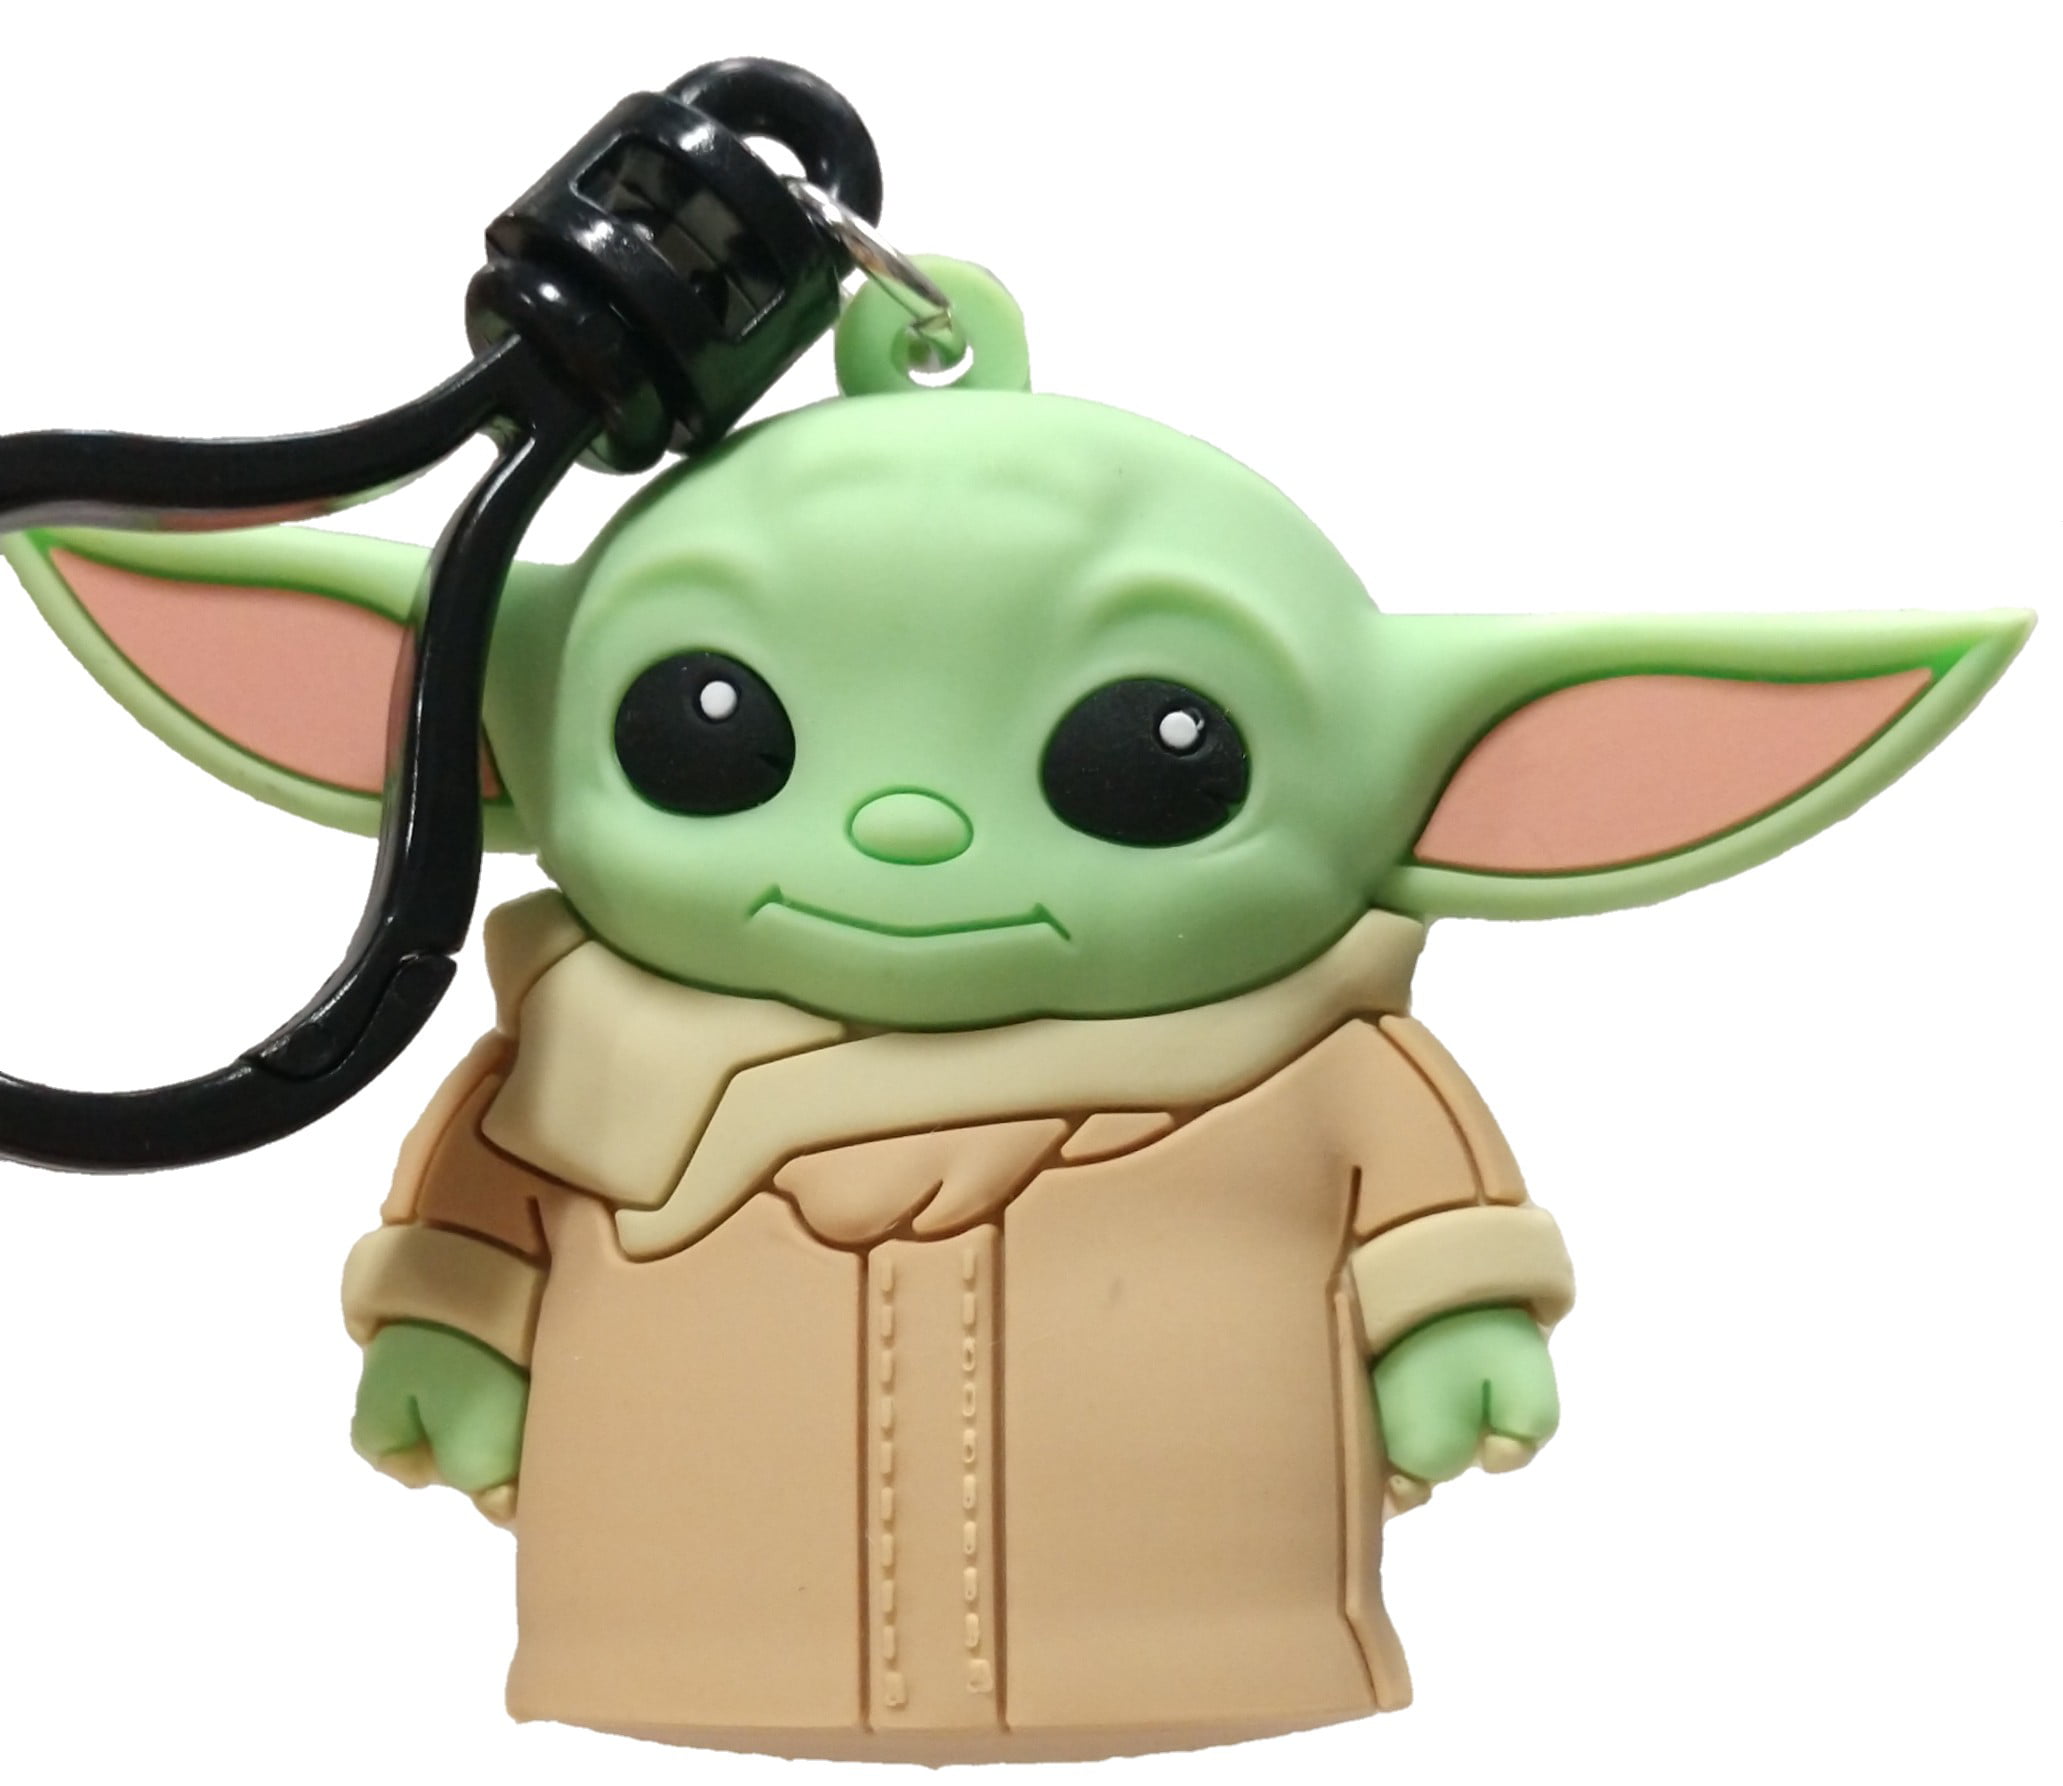 Star wars the child baby Yoda 6.75 inch printed plush key chain clip on 